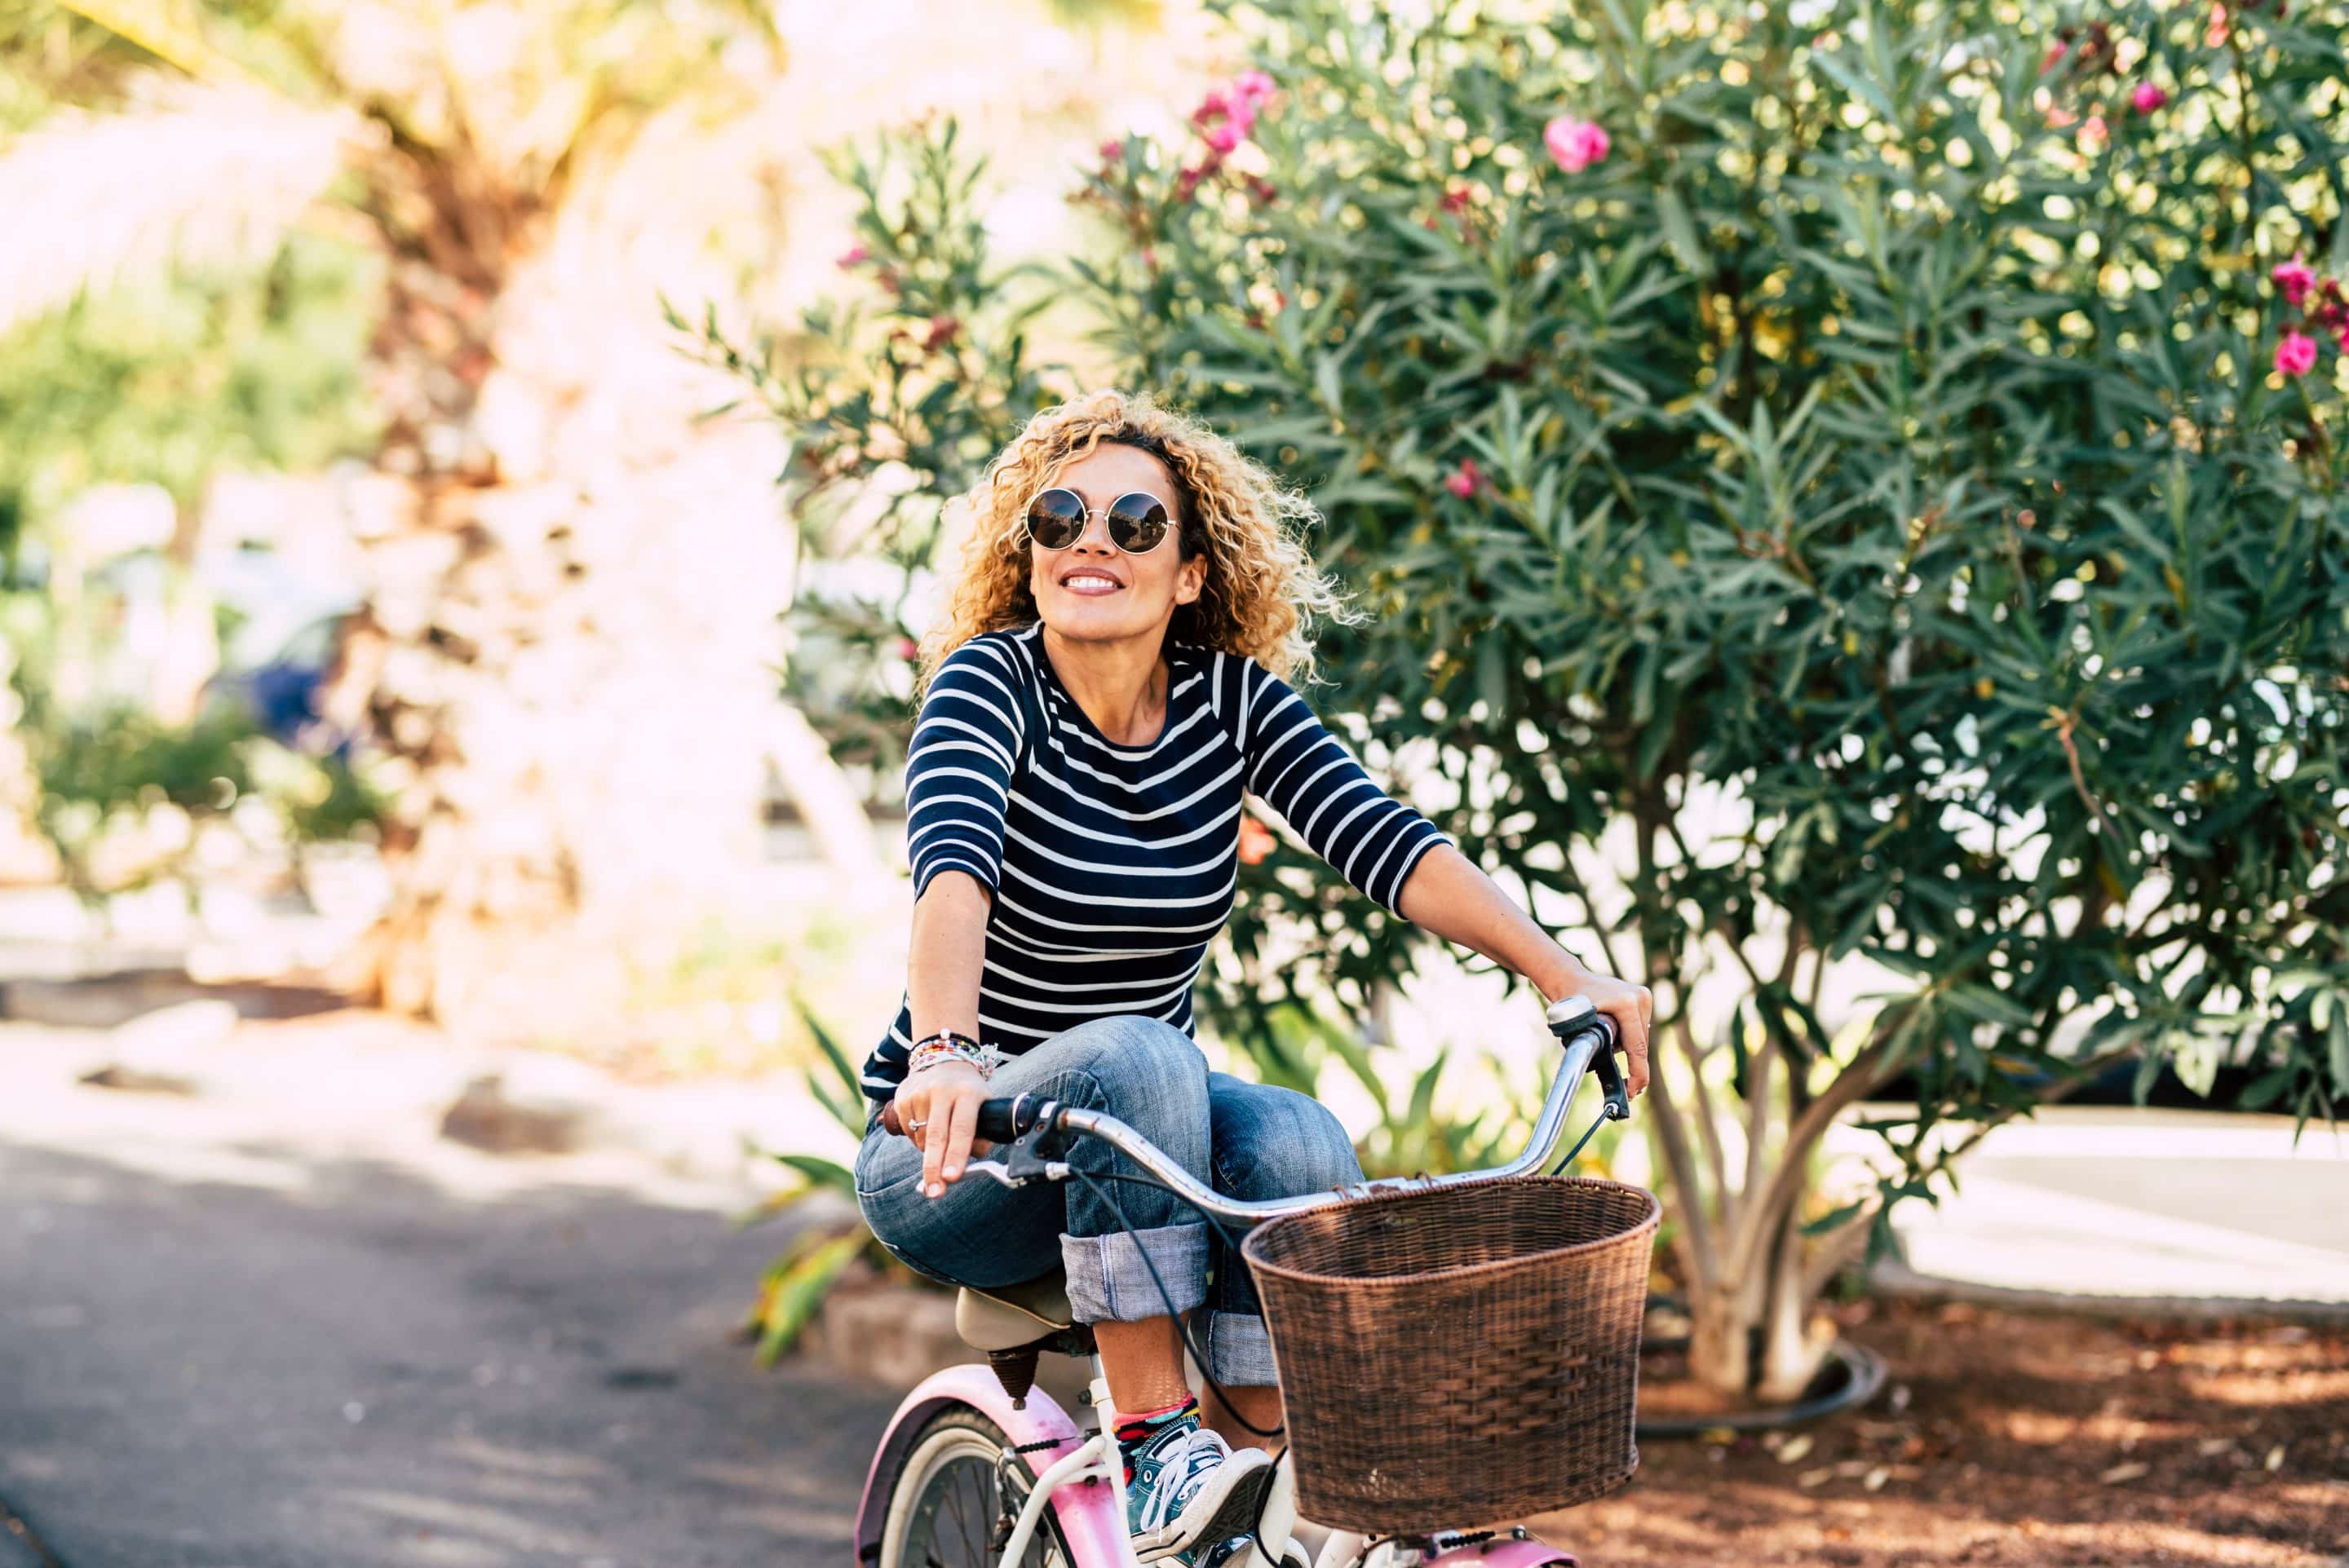 Woman on bike smiling